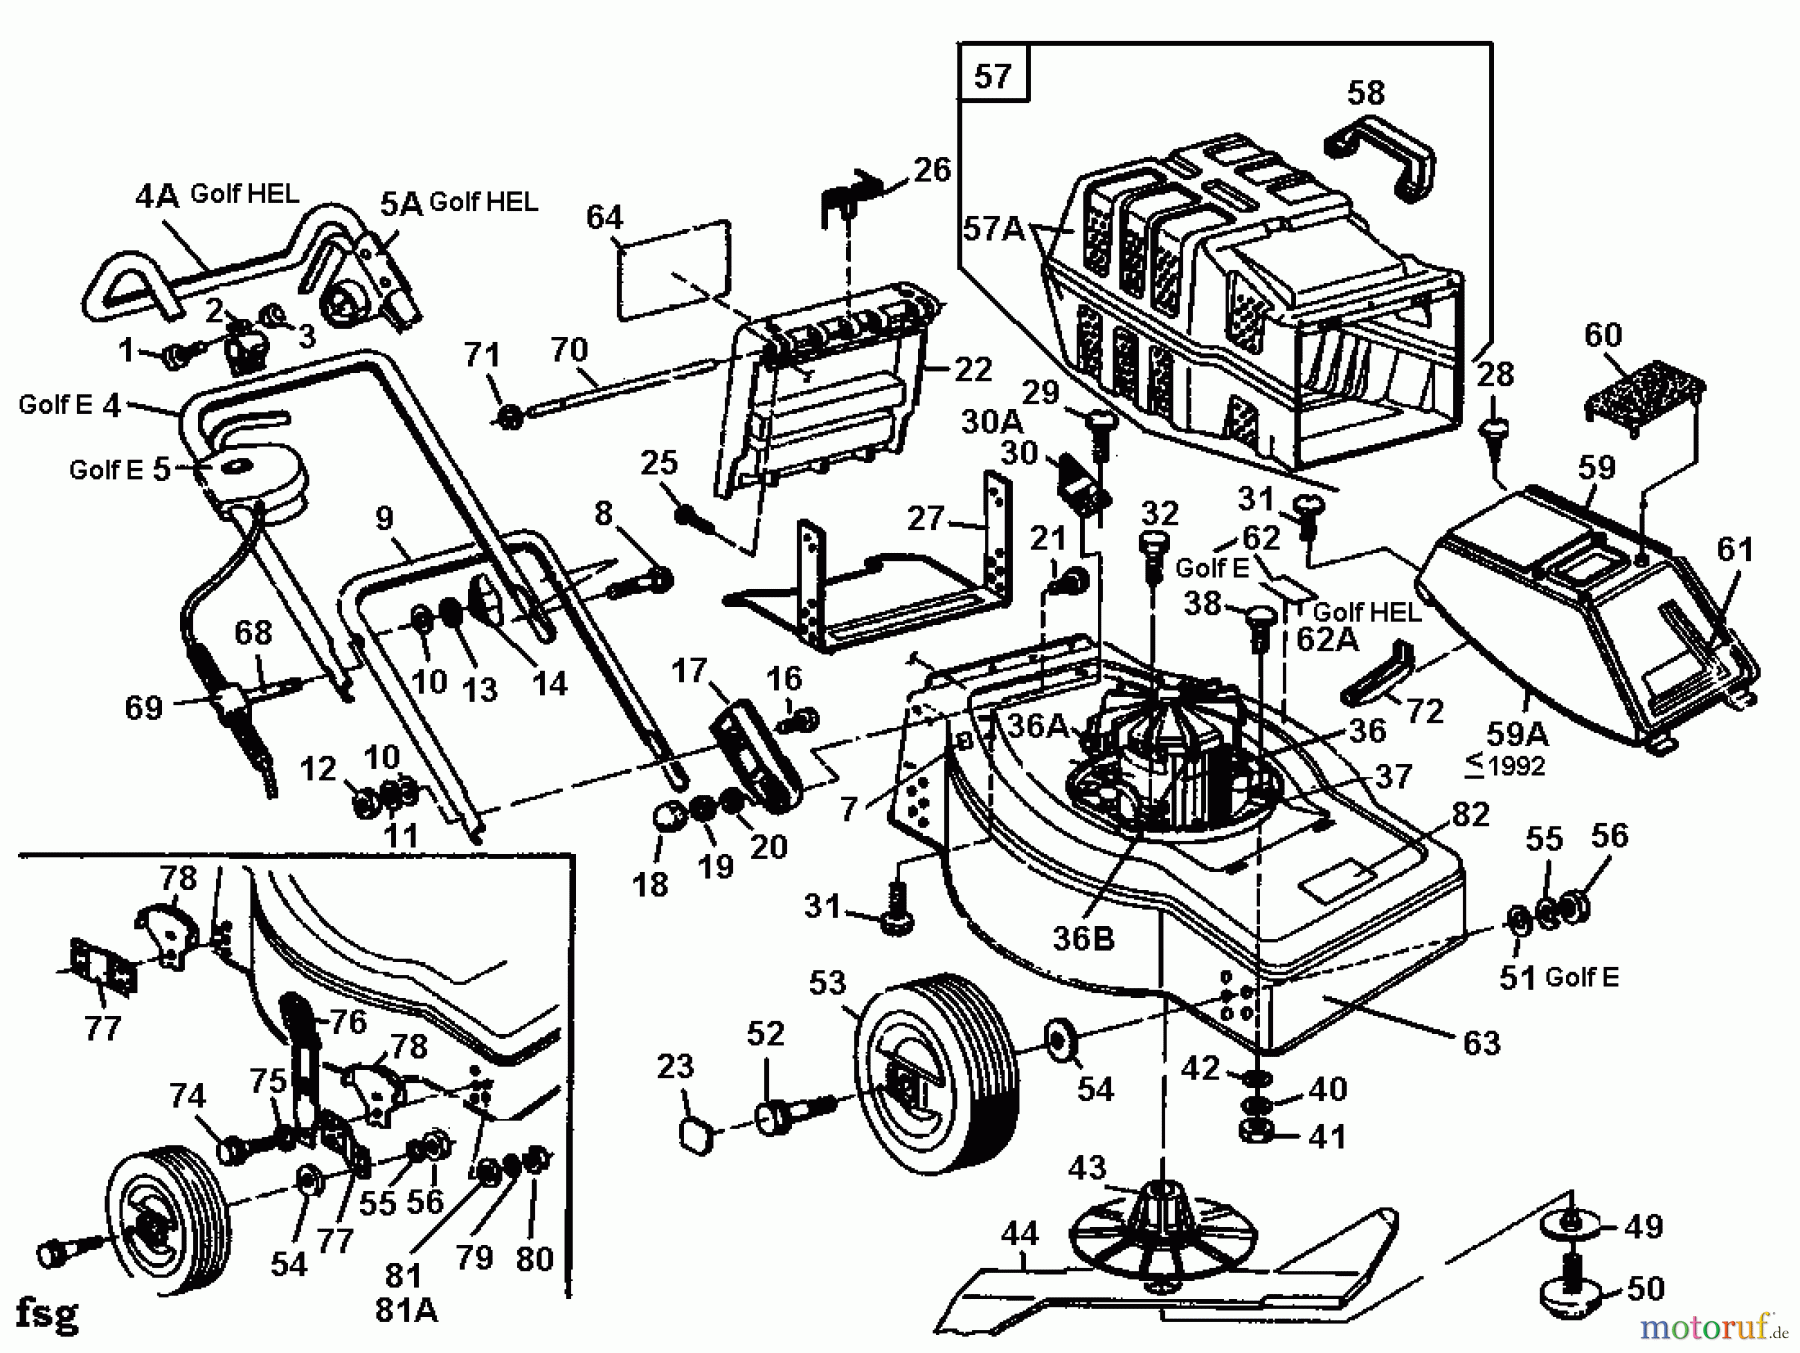  Golf Electric mower HEL 02881.07  (1992) Basic machine